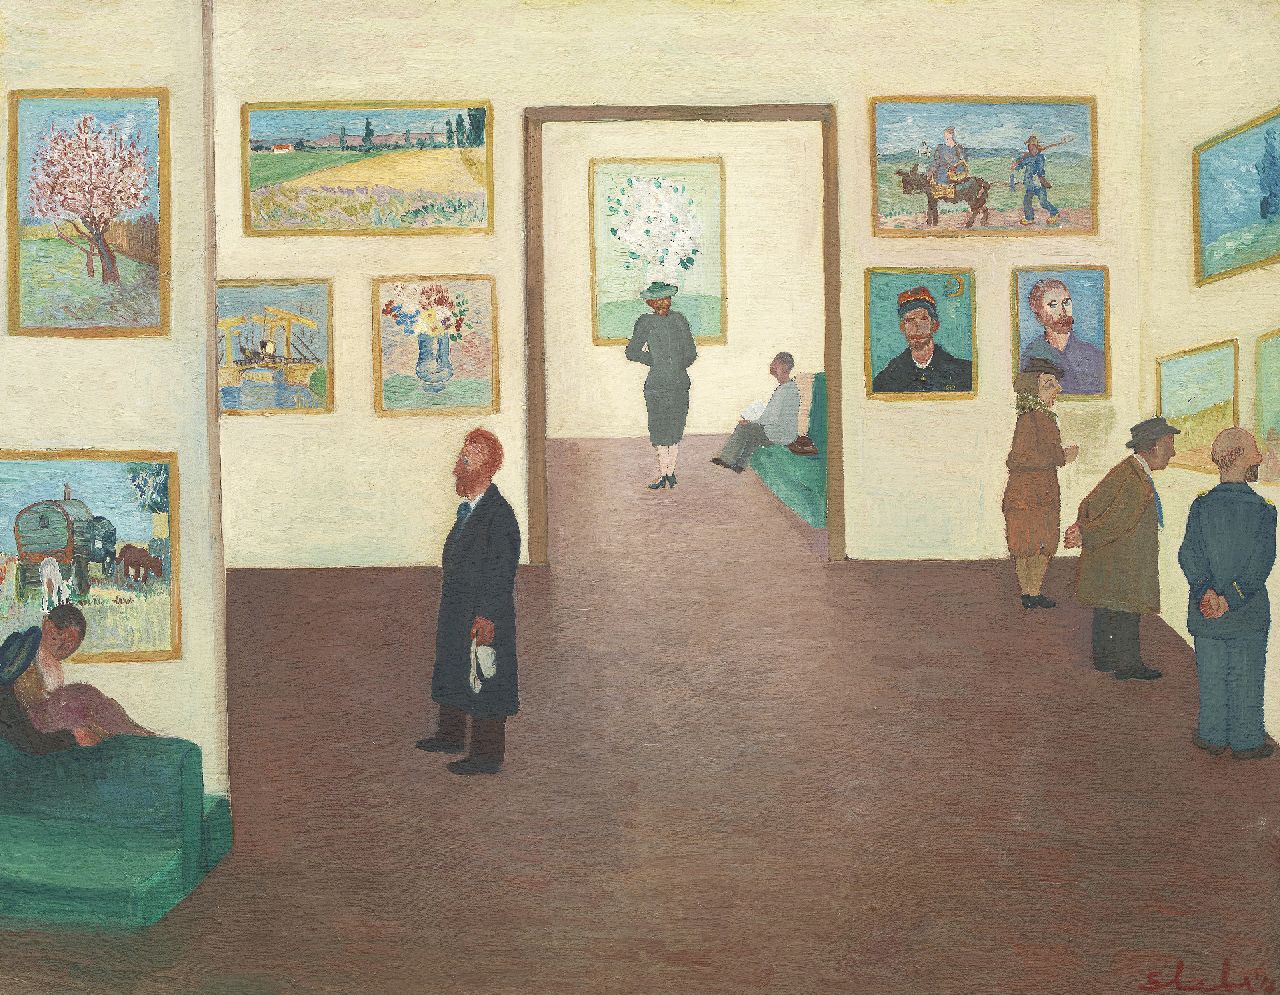 Slebe (Ferdinand Joseph Sleebe) F.  | Ferry Slebe (Ferdinand Joseph Sleebe) | Schilderijen te koop aangeboden | De Van Gogh tentoonstelling, olieverf op doek 51,2 x 65,9 cm, gesigneerd rechtsonder en gedateerd '54[?]